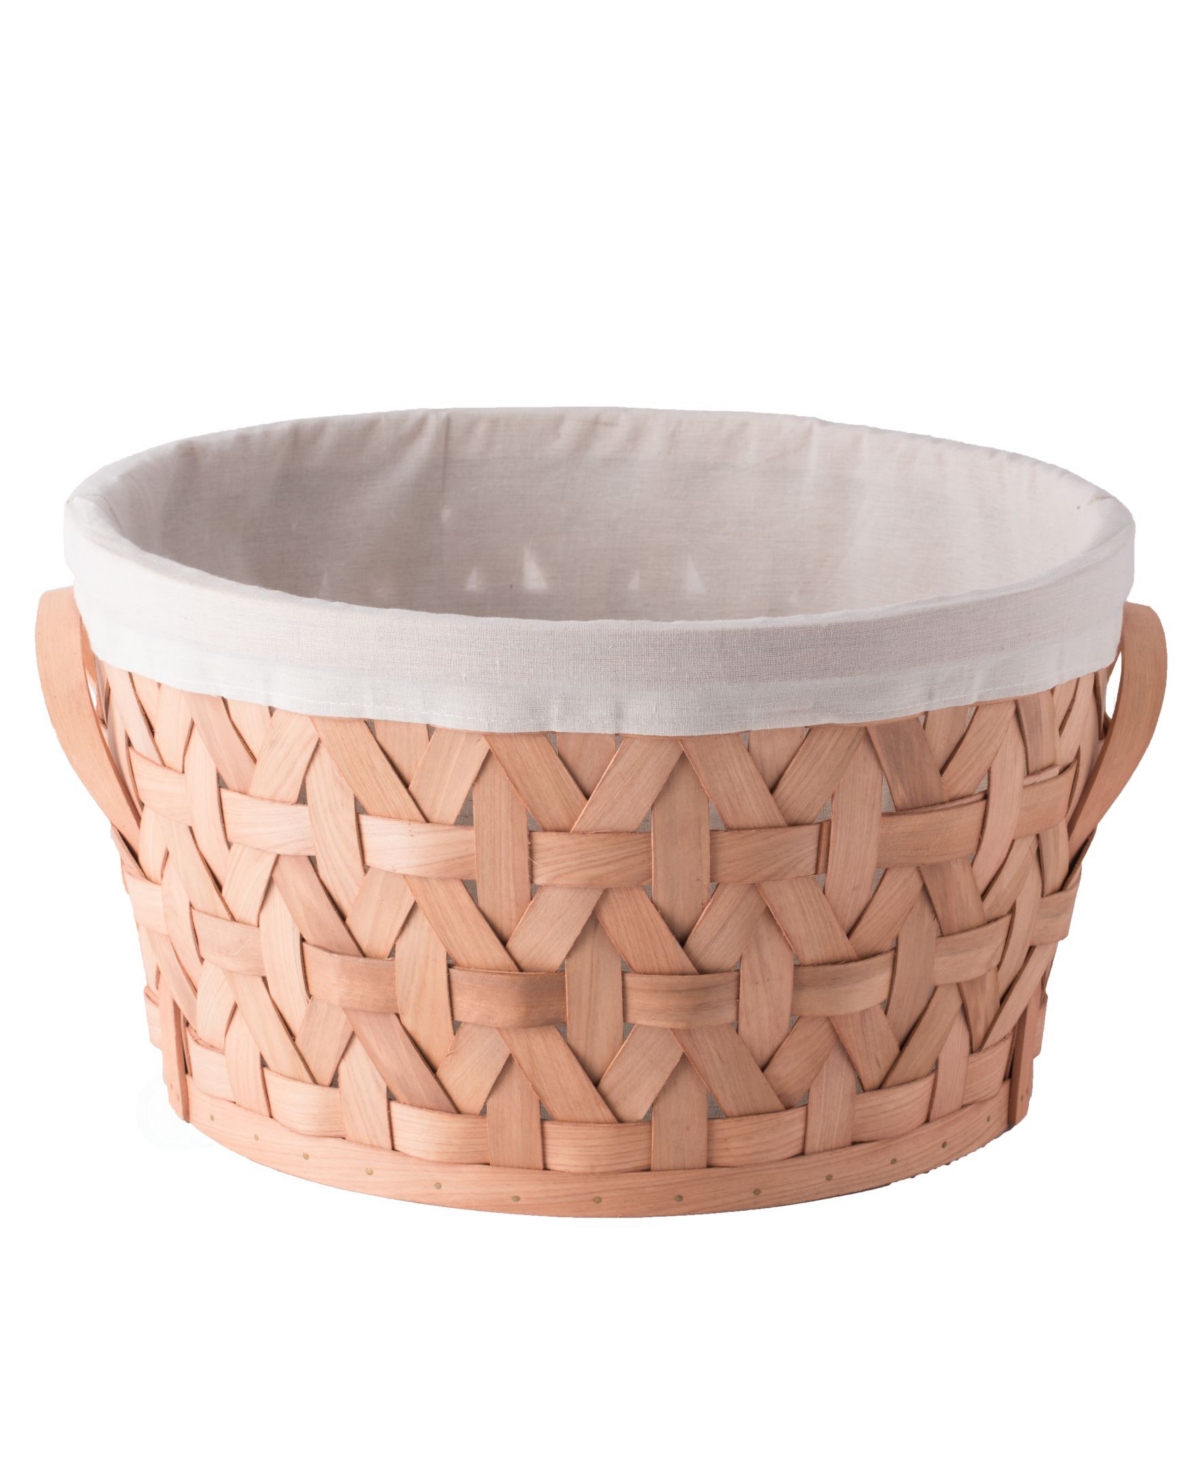 Wooden Round Display Large Basket Bins - Brown